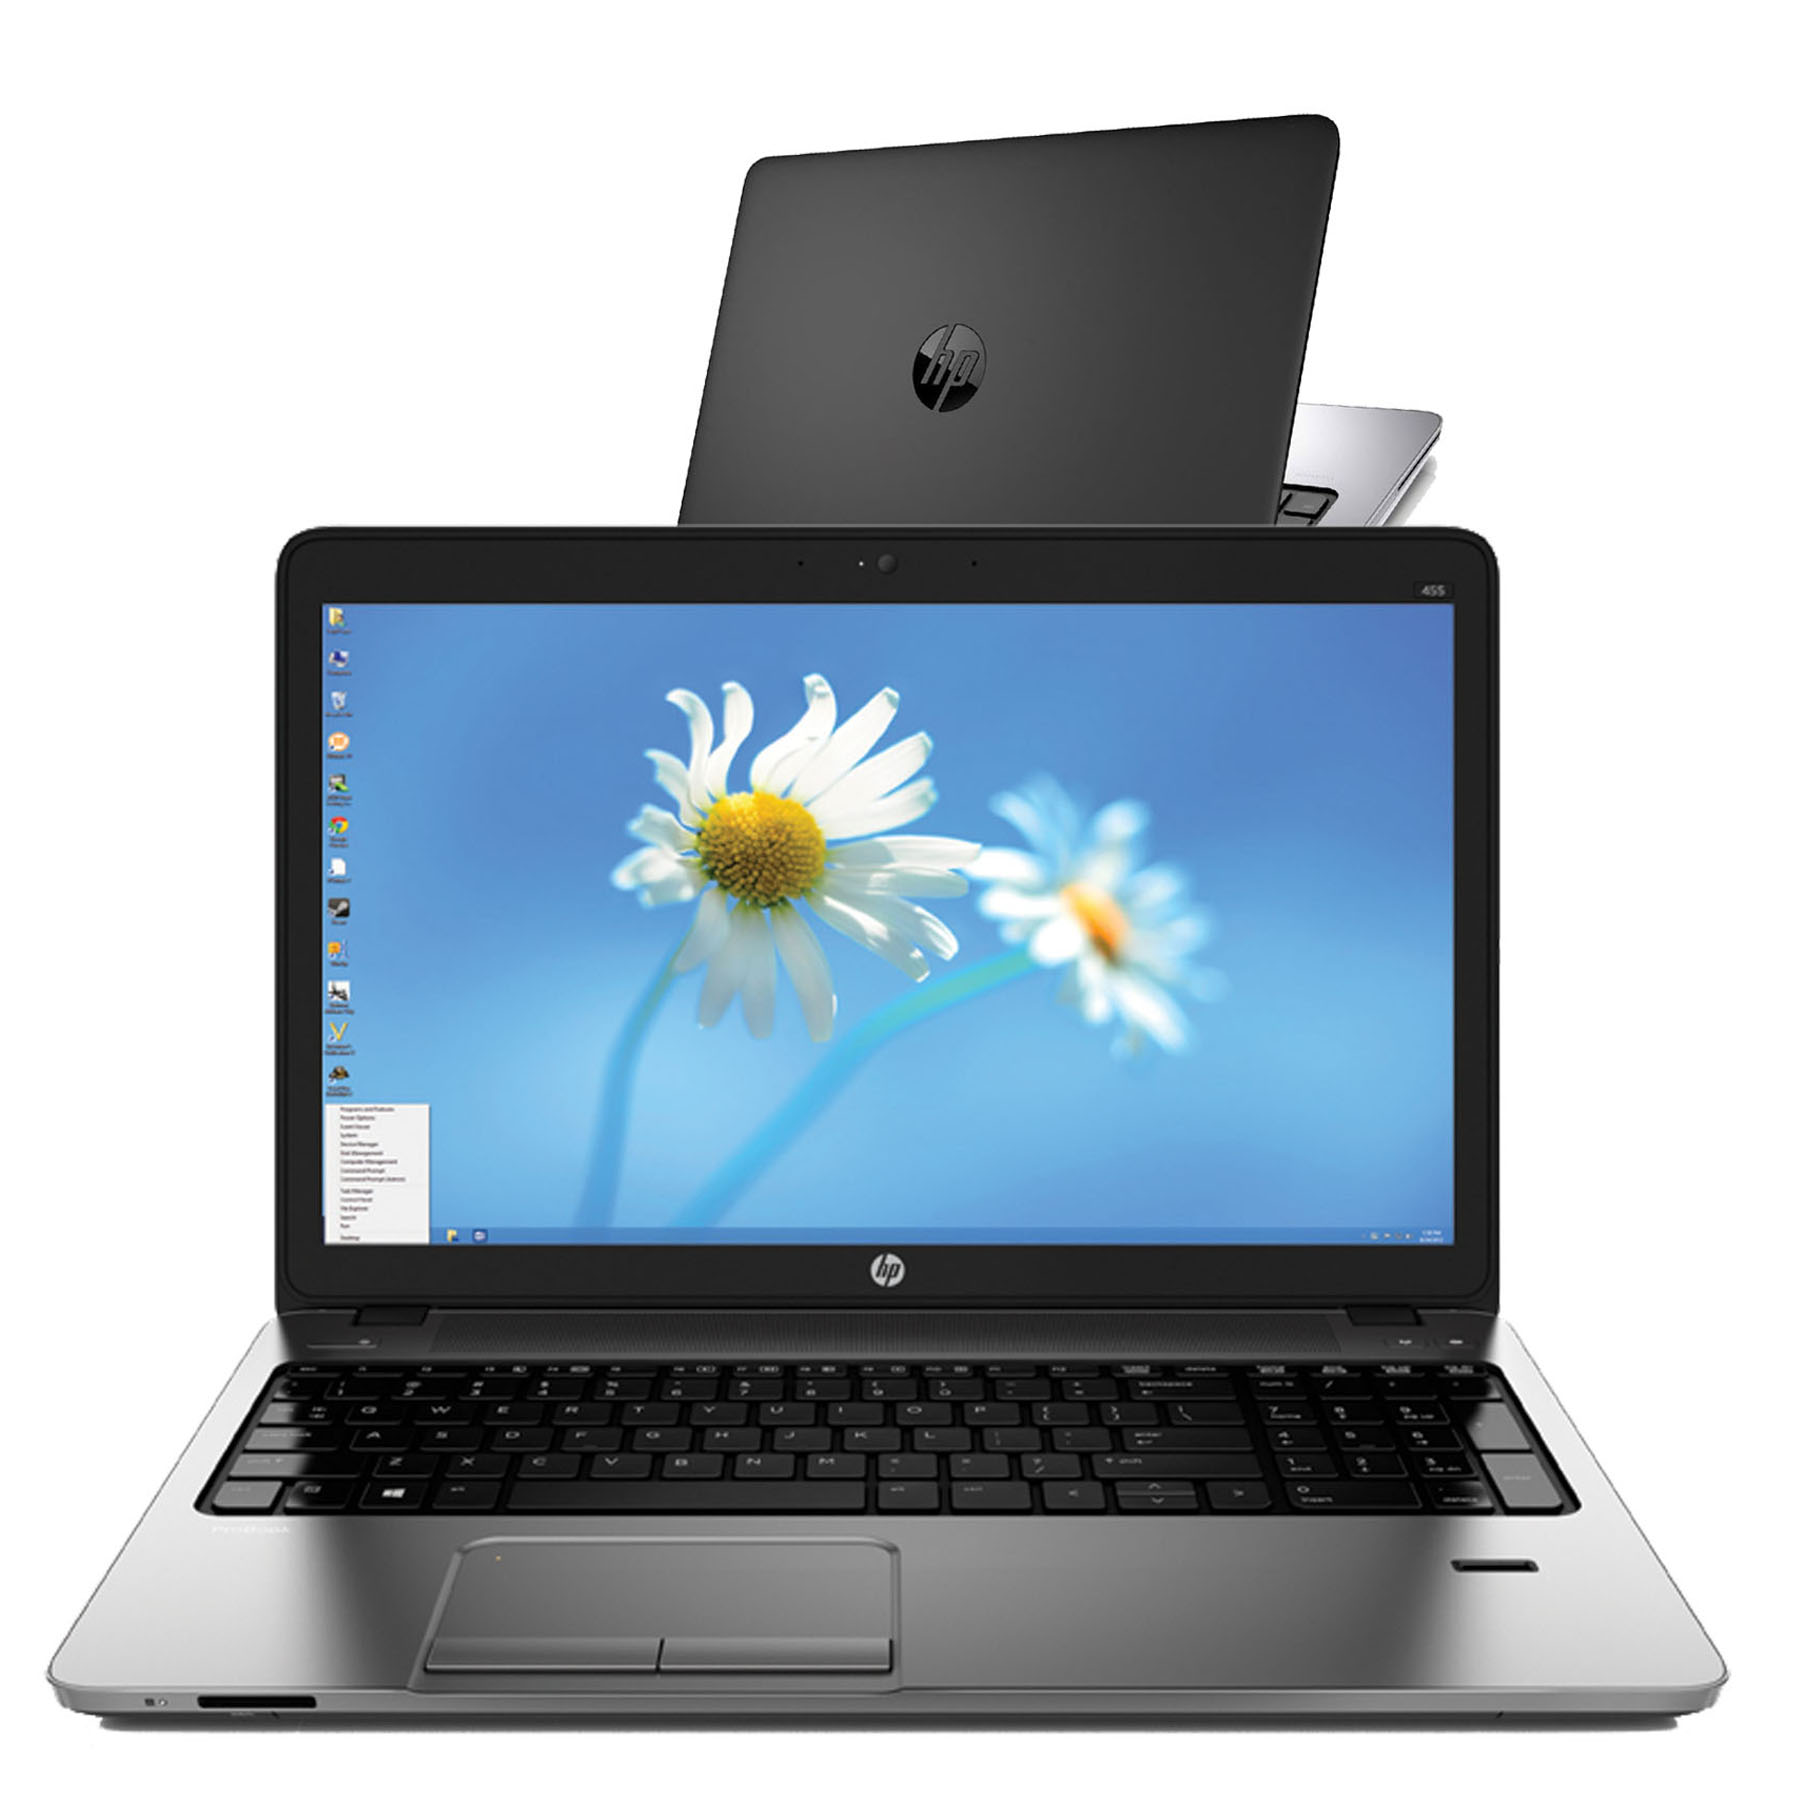 Laptop cũ HP ProBook 450 G1 (Core i5-4200M, 4GB, 120GB, VGA intel HD4600, 15.6 HD)